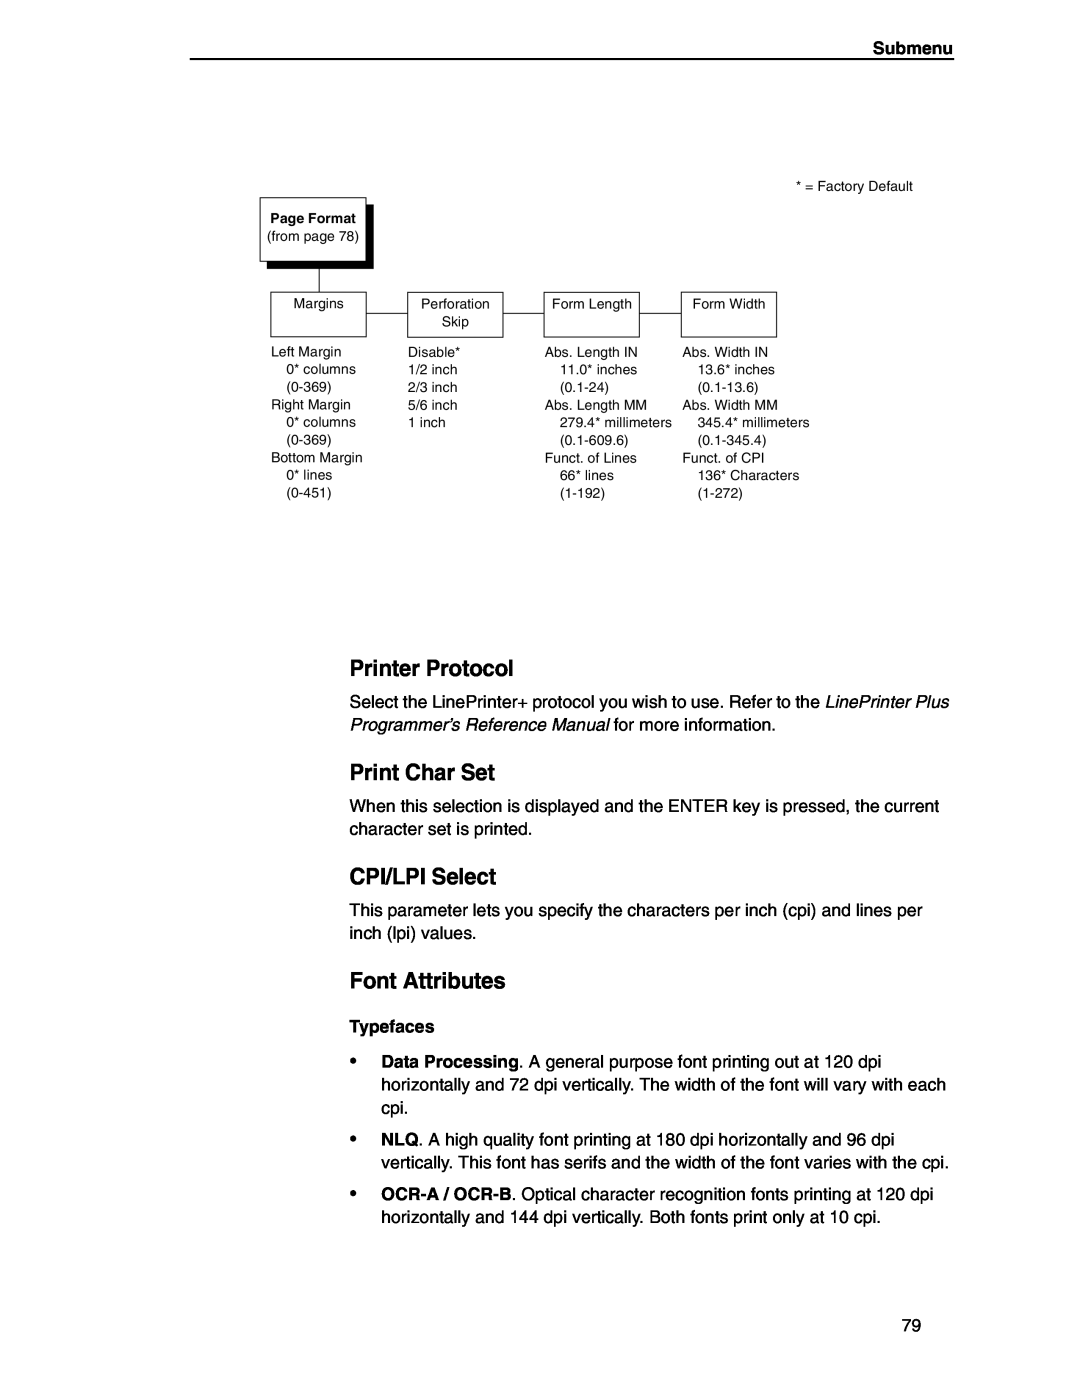 Compaq P5000 Series setup guide Printer Protocol, Print Char Set, CPI/LPI Select, Font Attributes, Typefaces, Submenu 